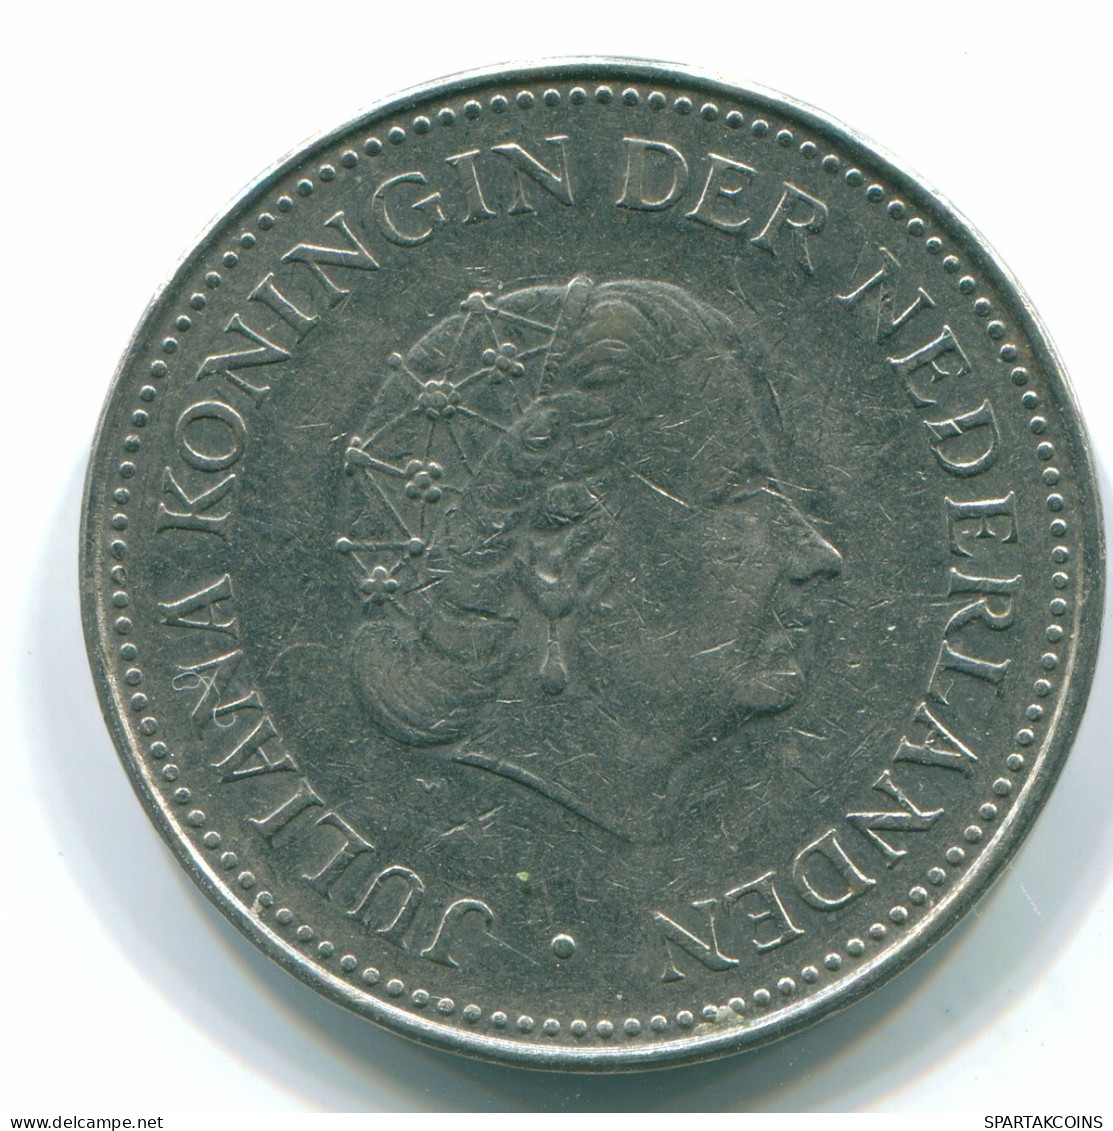 1 GULDEN 1971 NETHERLANDS ANTILLES Nickel Colonial Coin #S11988.U.A - Antilles Néerlandaises